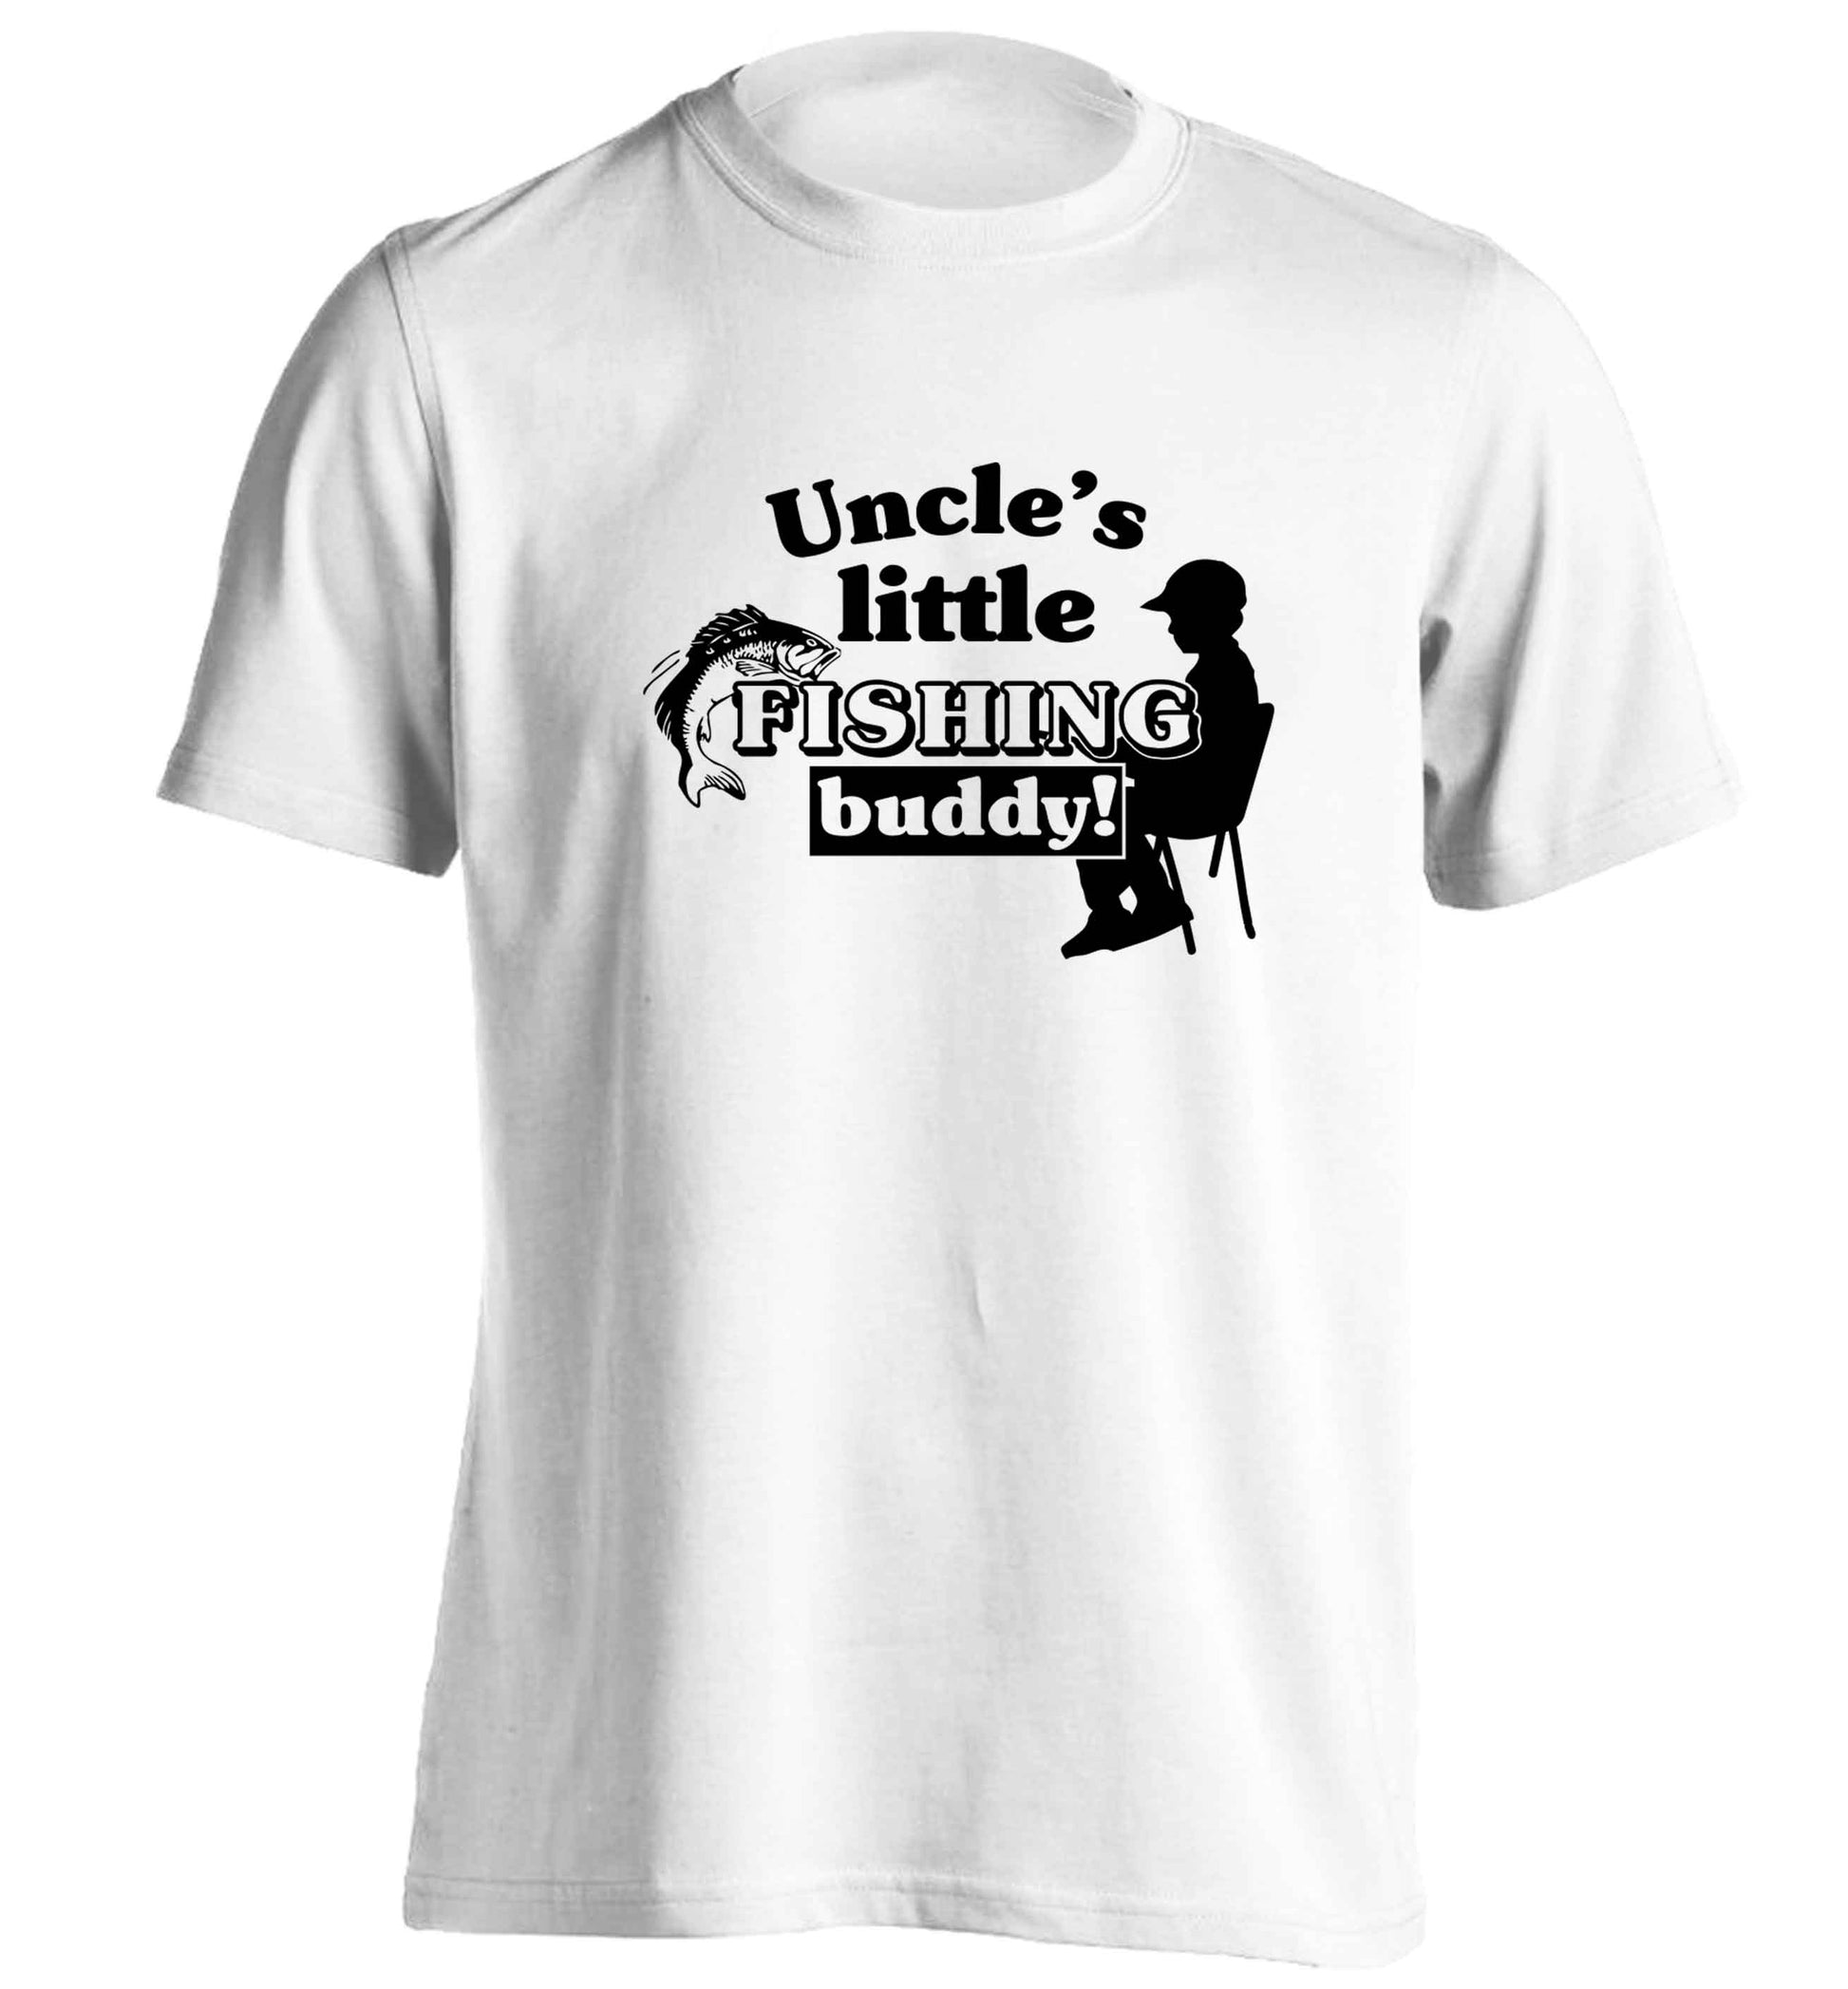 Uncle's little fishing buddy adults unisex white Tshirt 2XL